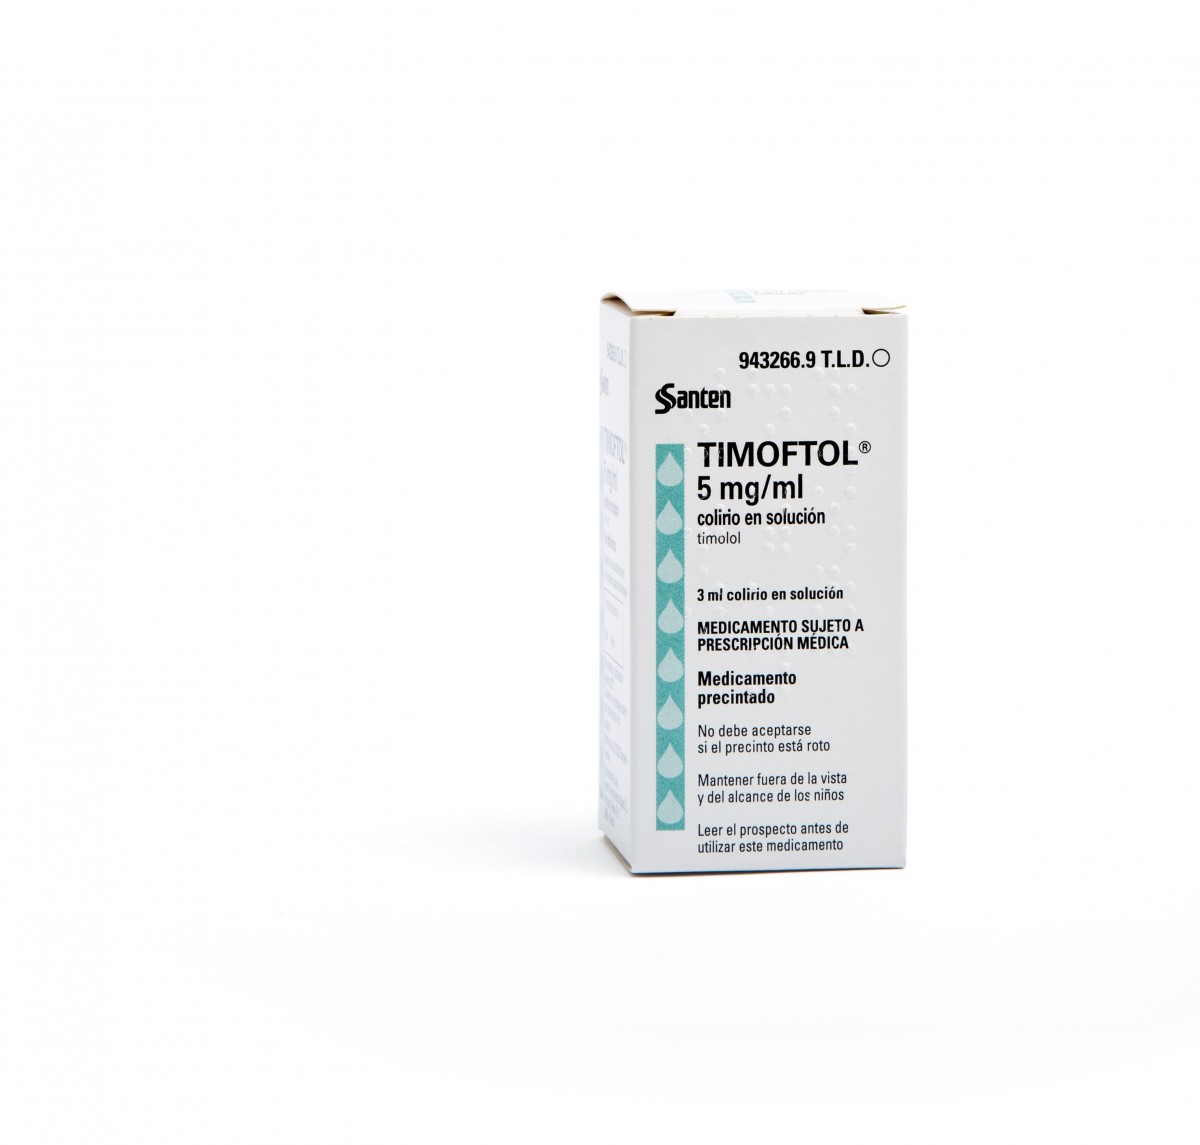 TIMOFTOL 5 mg/ml COLIRIO EN SOLUCION,1 frasco de 5 ml fotografía del envase.